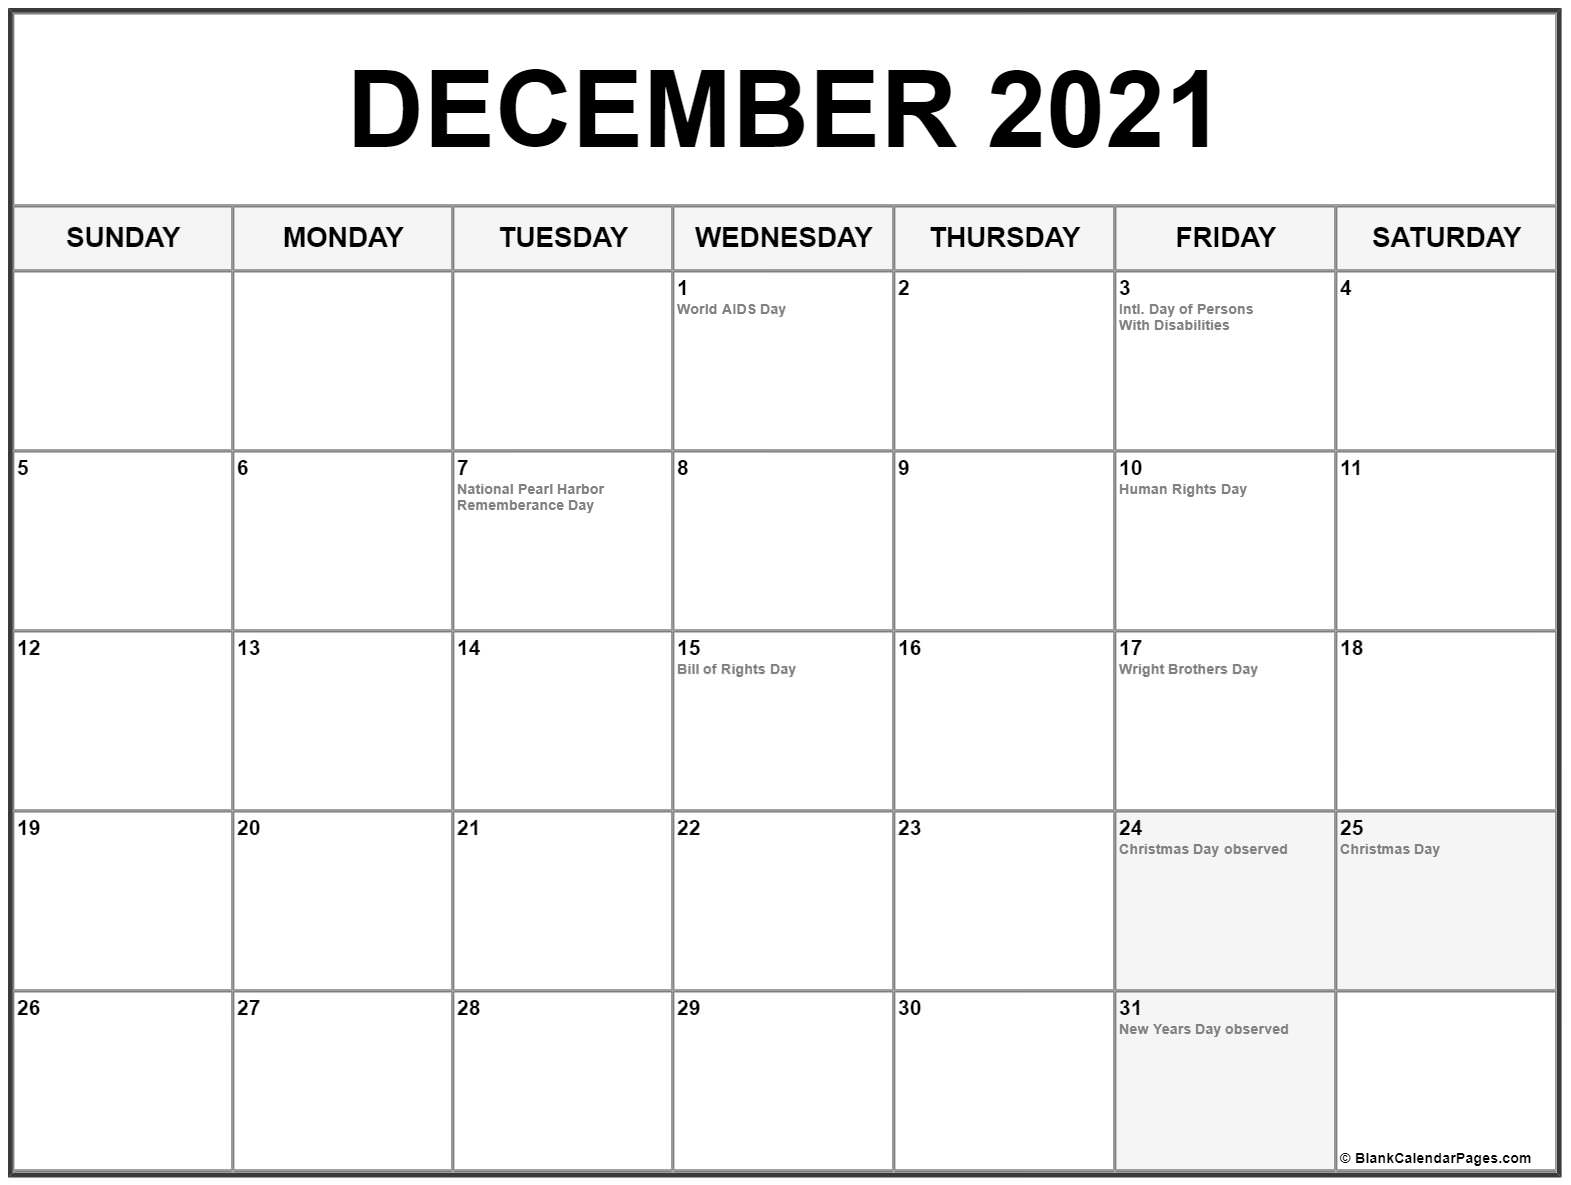 Dec 2021 Calendar Colorful | Avnitasoni inside November 2022 Calendar Word Avnitasoni